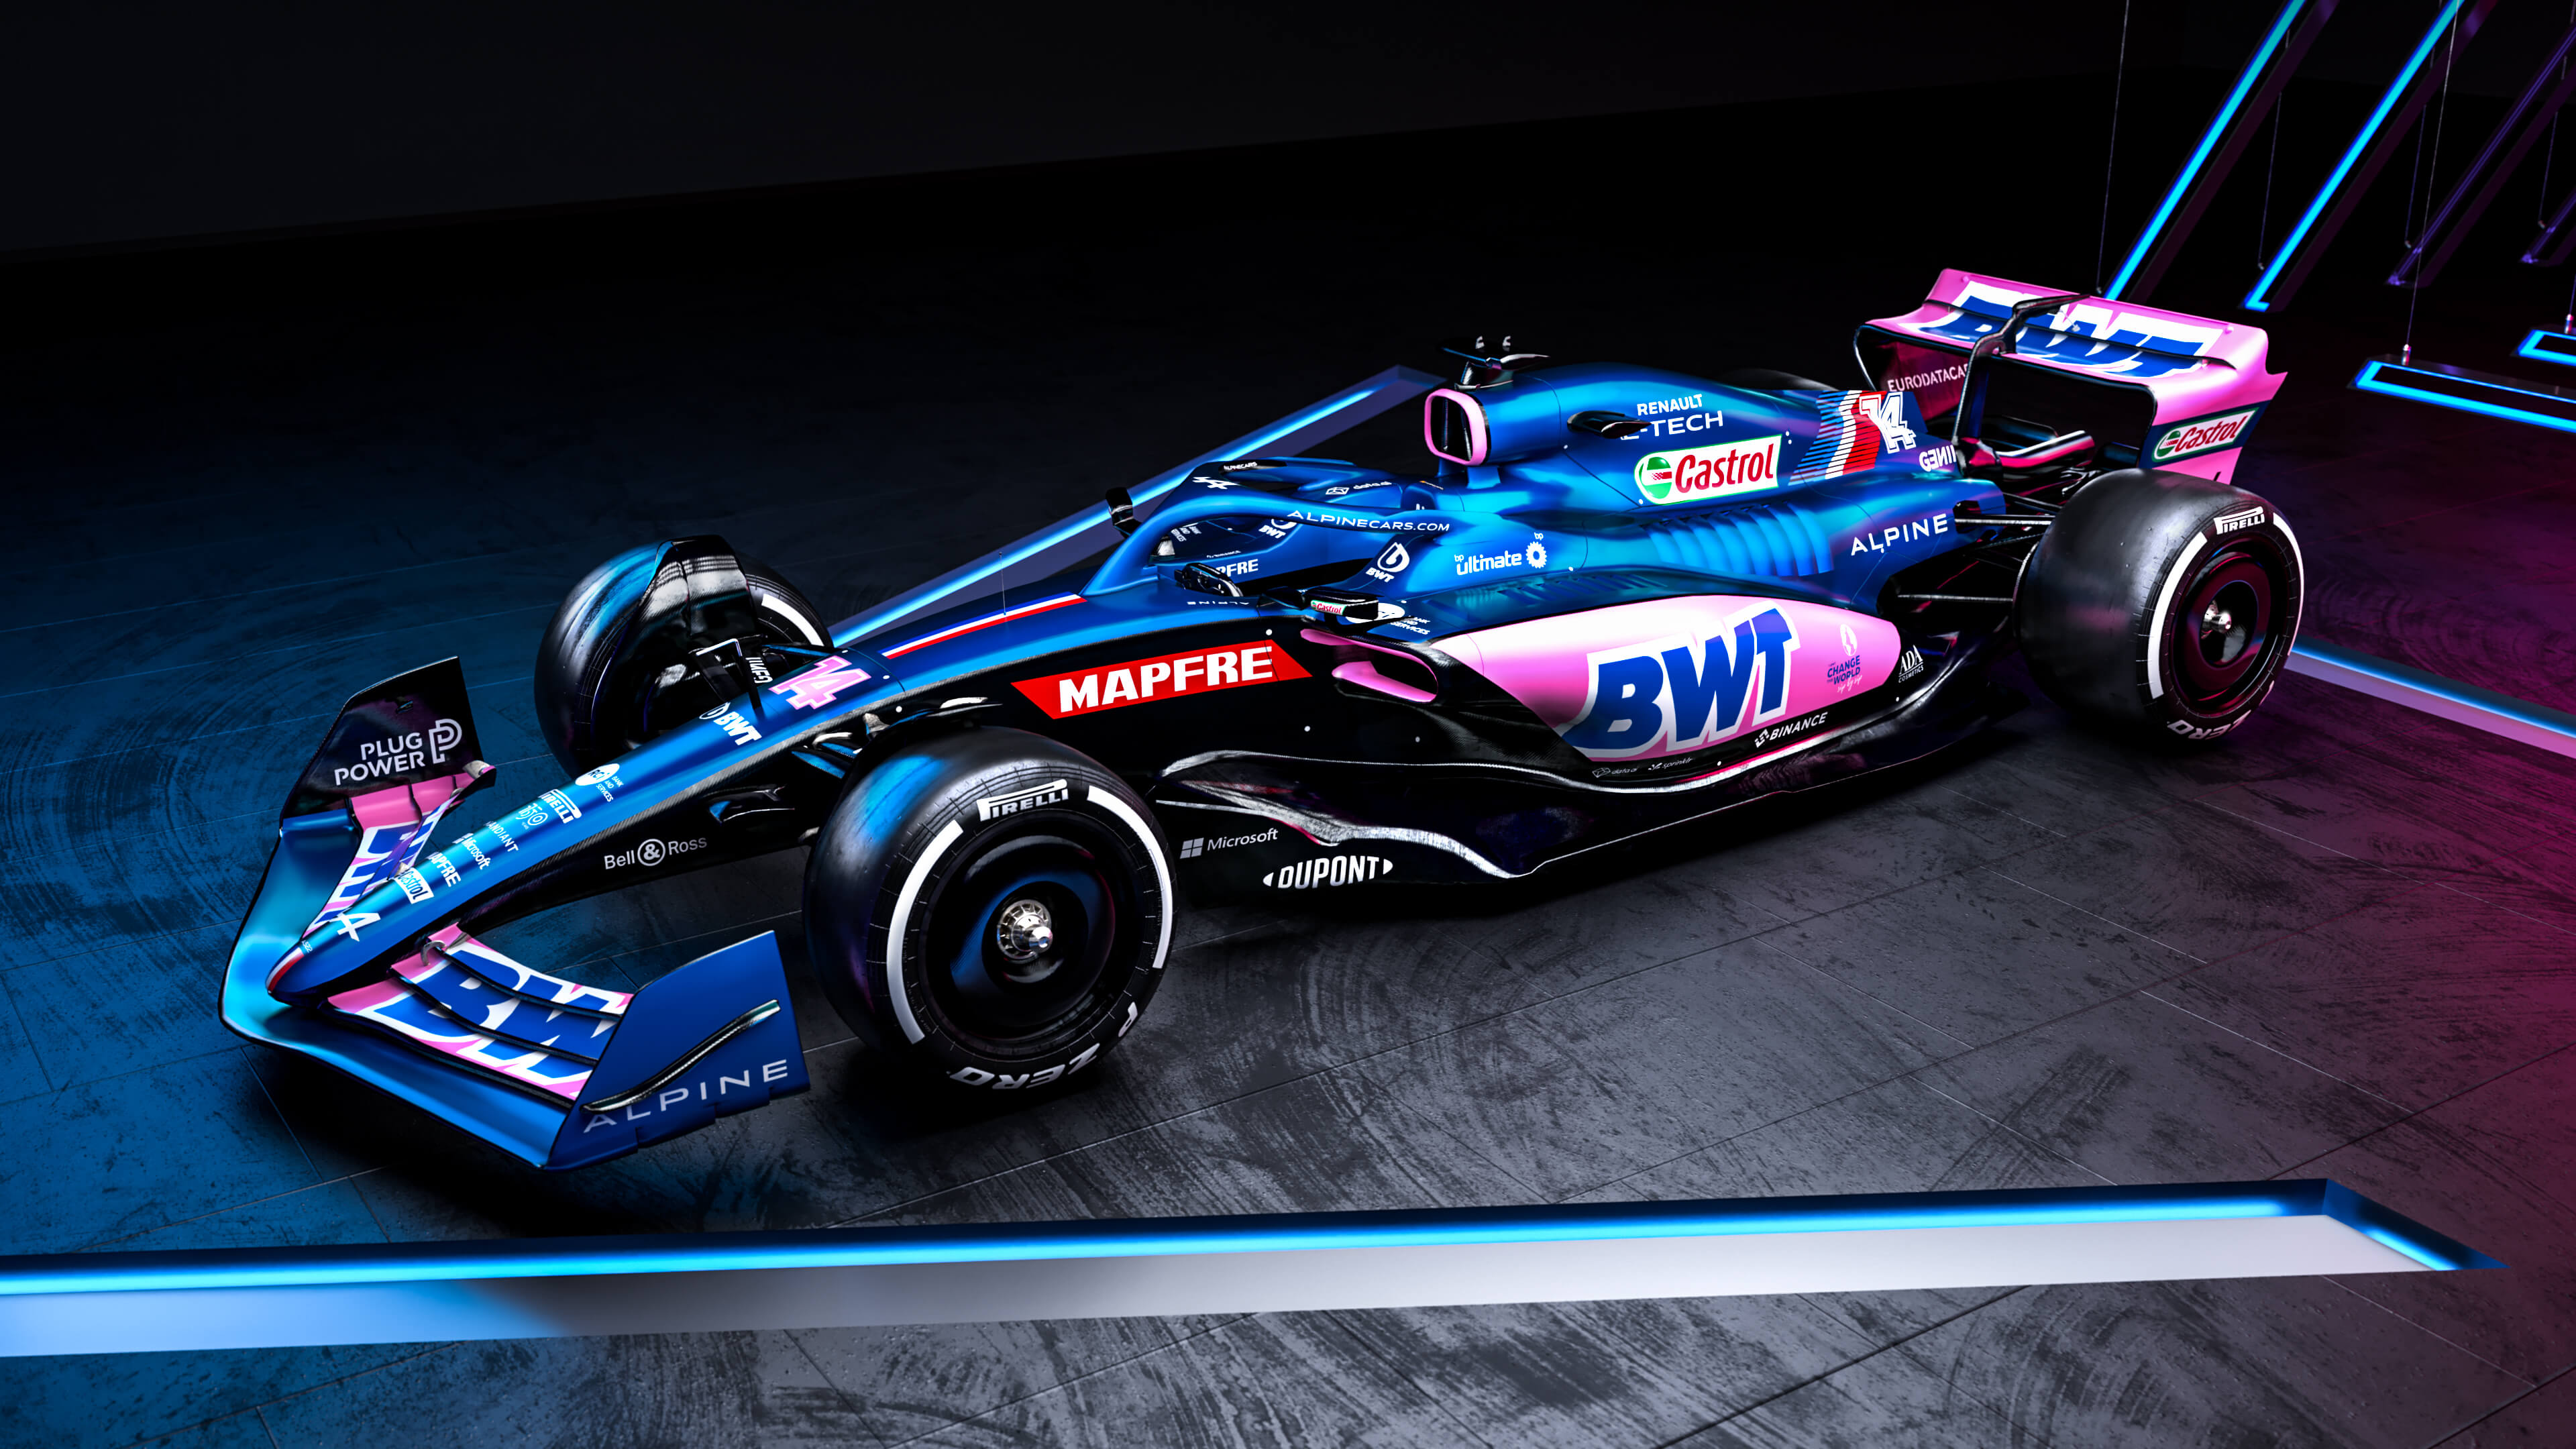 2022 - BWT Alpine F1 Team - Launch A522 - Blue single seater-1